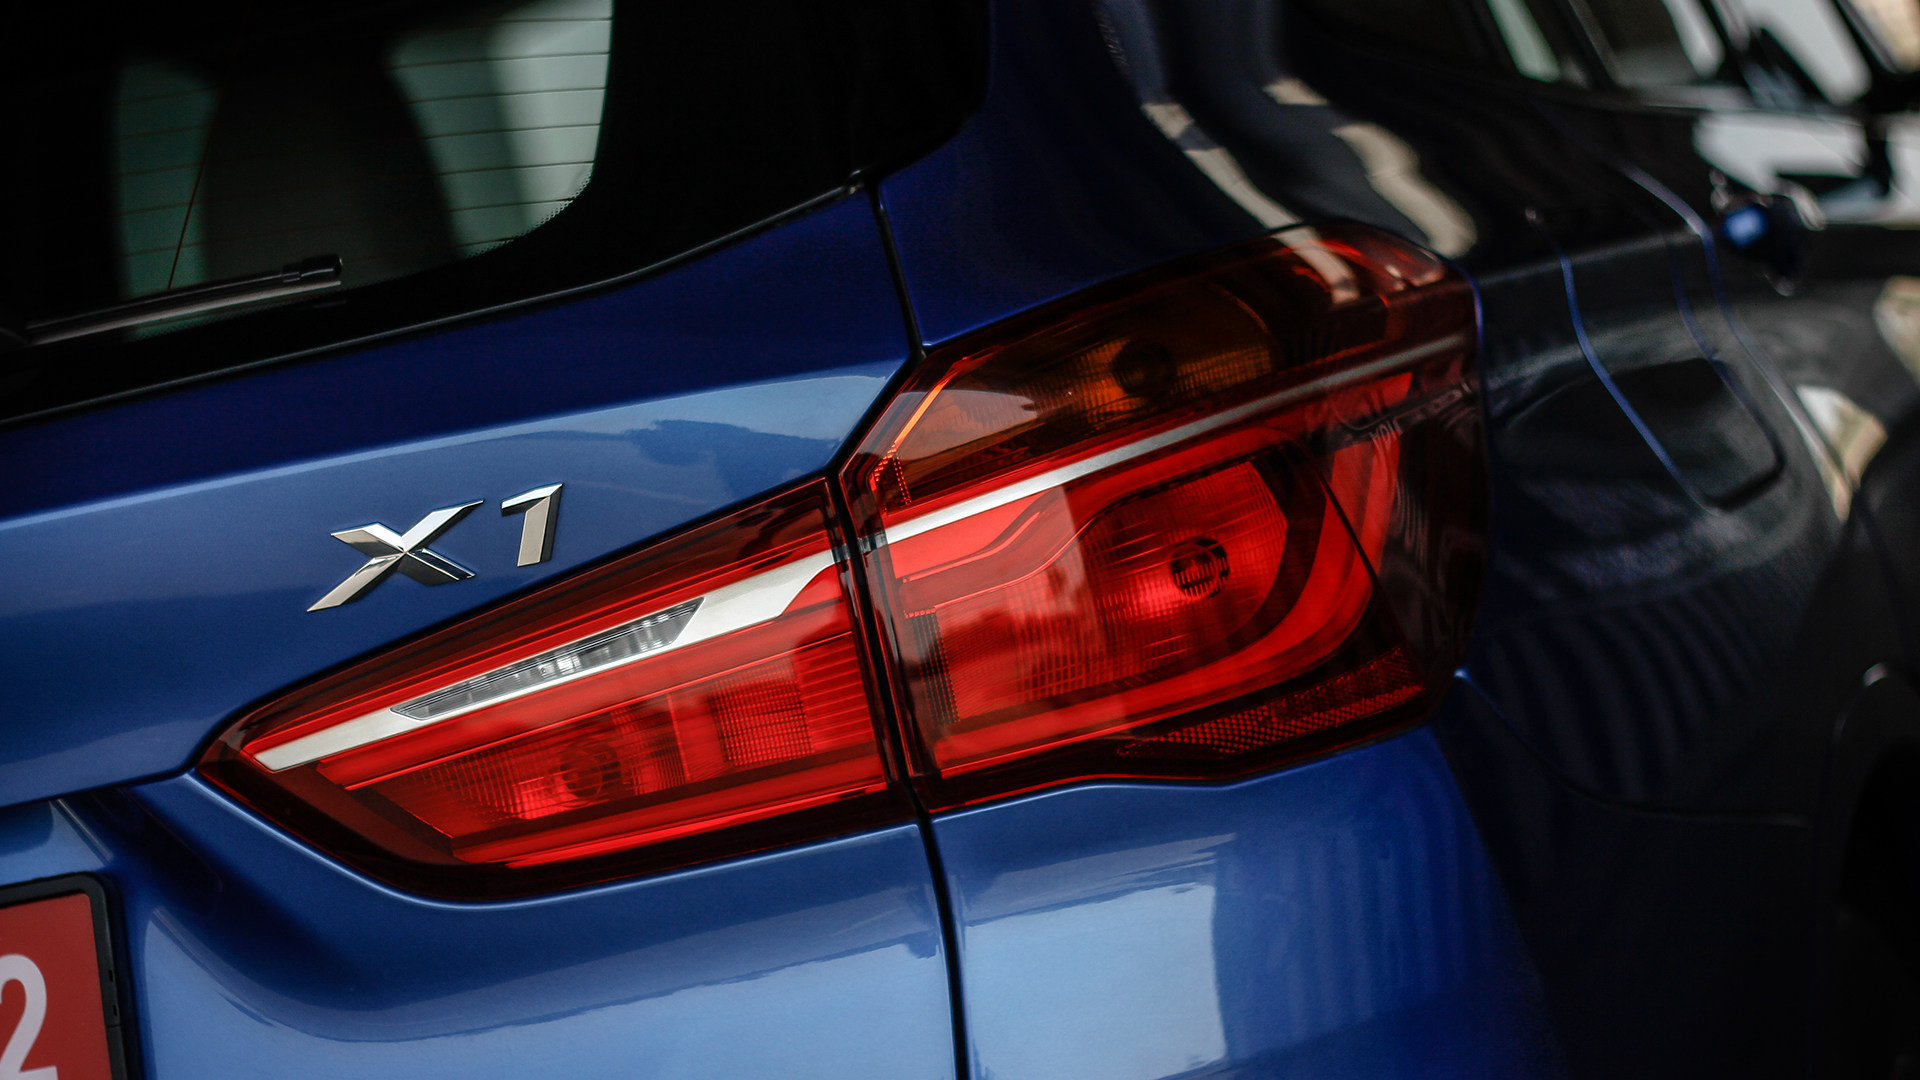 BMW X1 2016 xDrive 20d xLine Exterior